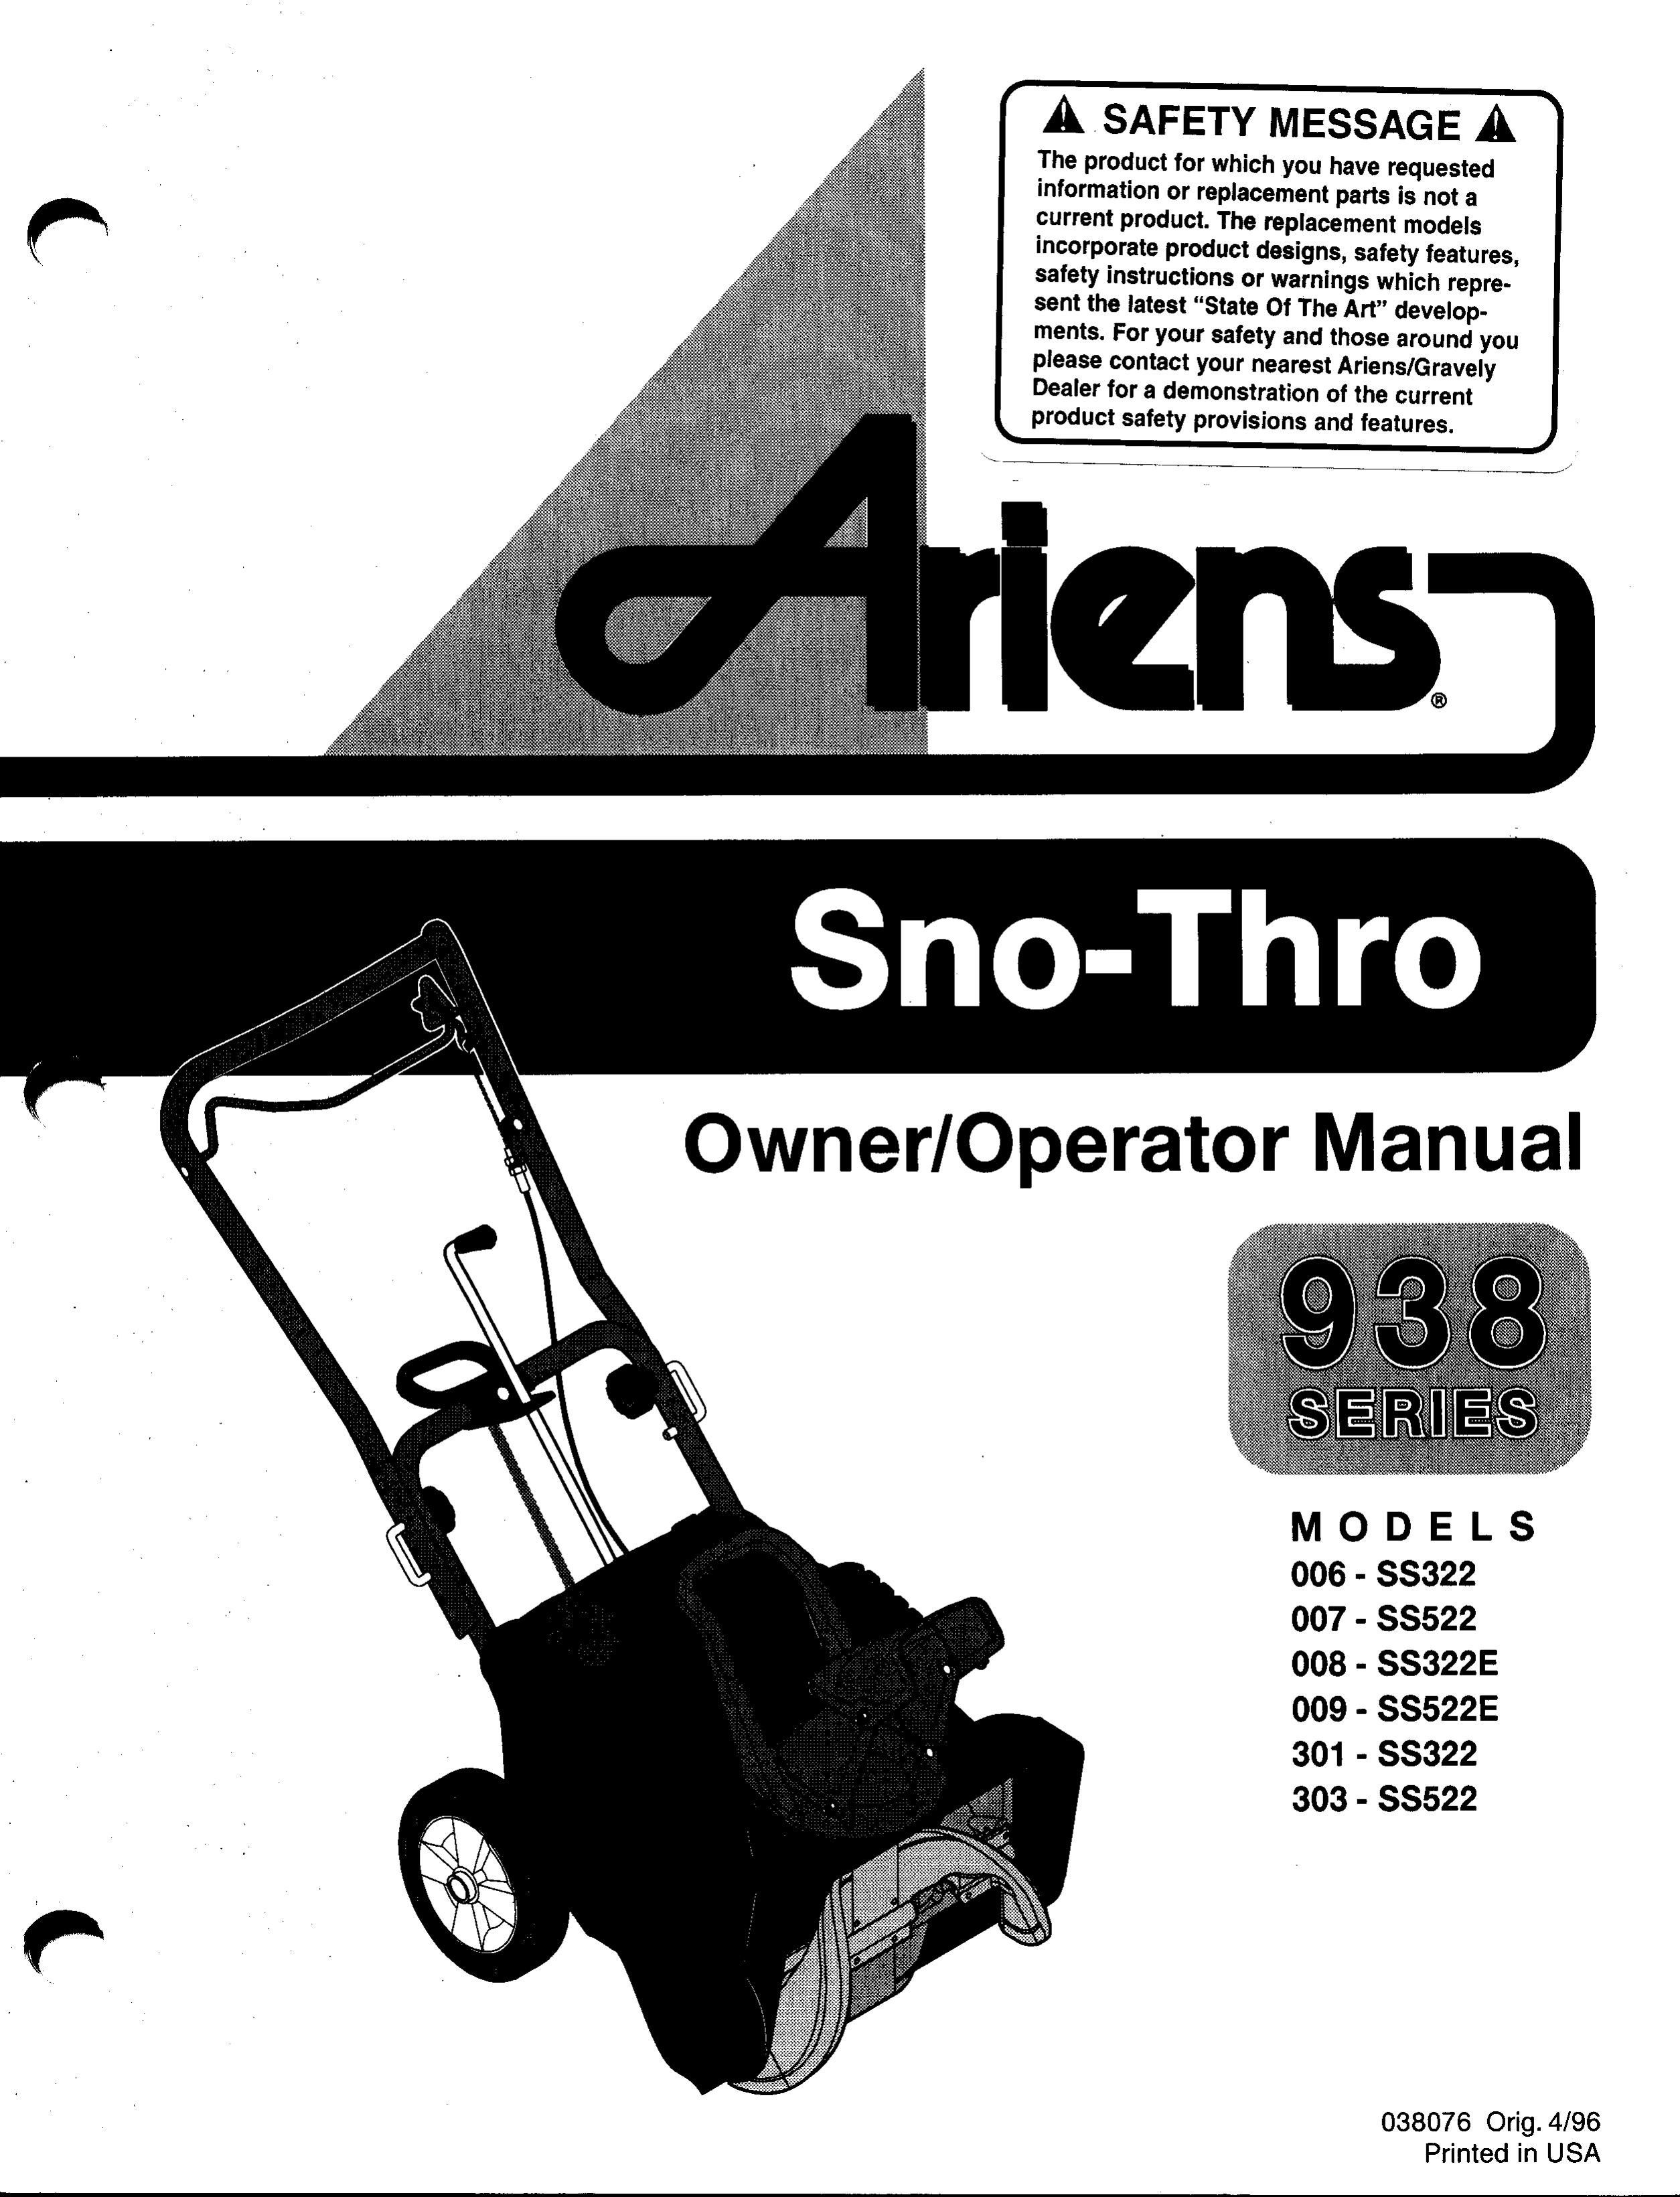 Ariens 007-SS522 Snow Blower User Manual